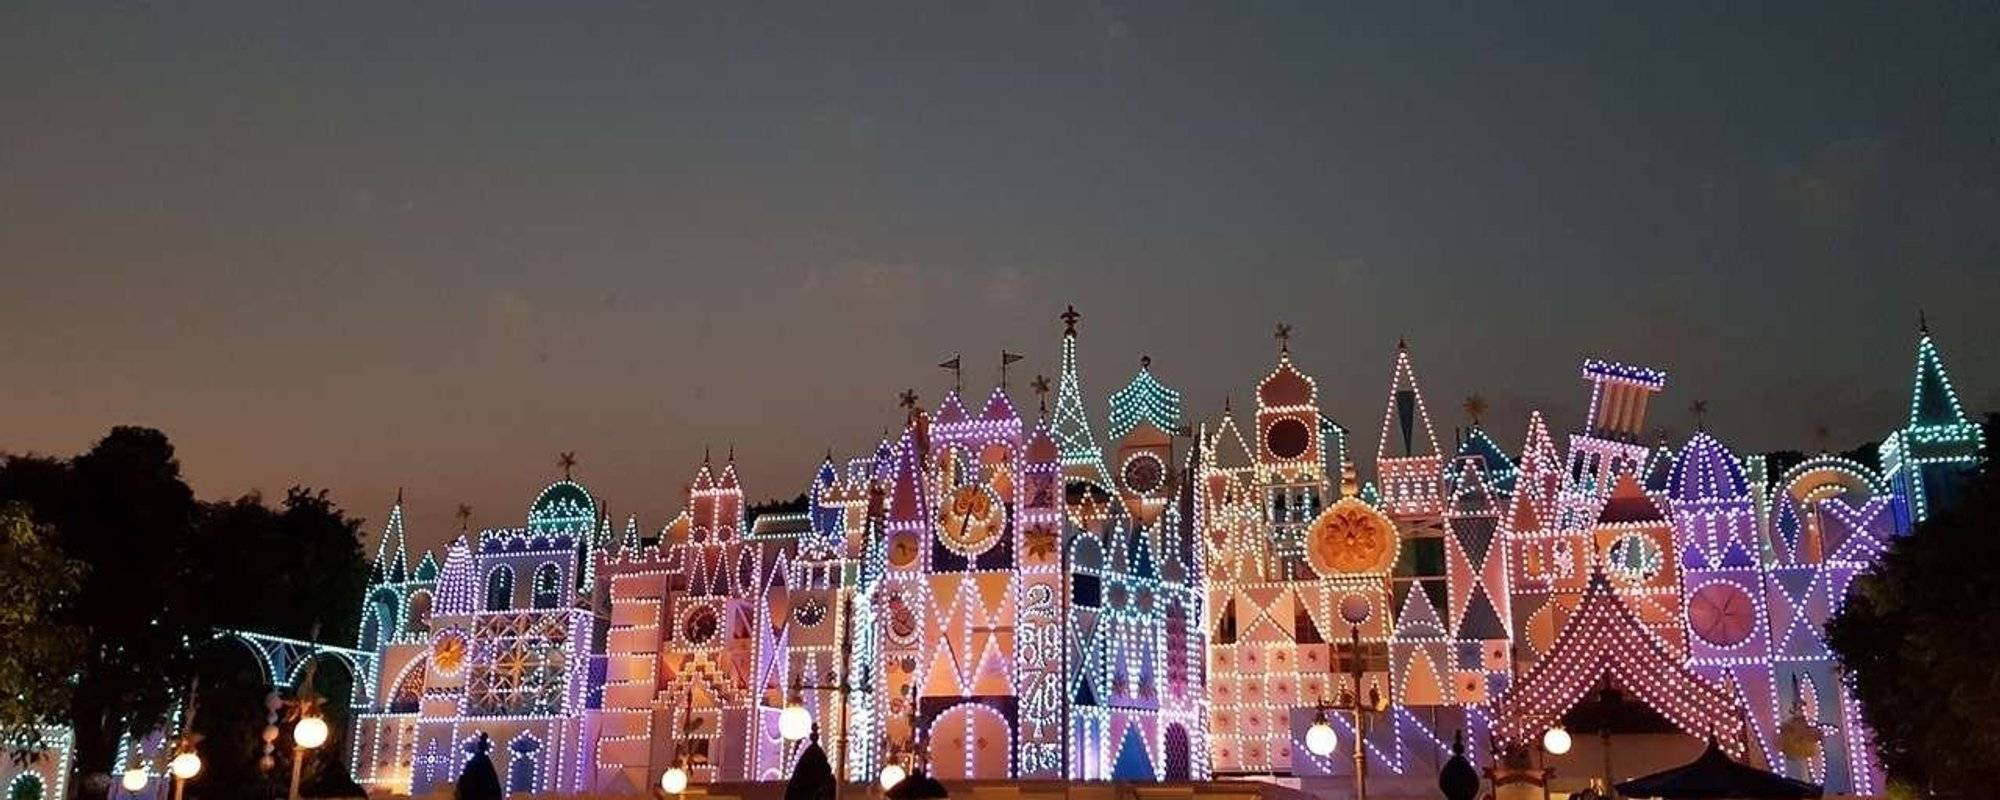 📷✈️It’s a Small World at Disneyland Hong Kong | 小小世界在香港迪士尼乐园 HK050  (by @ace108)